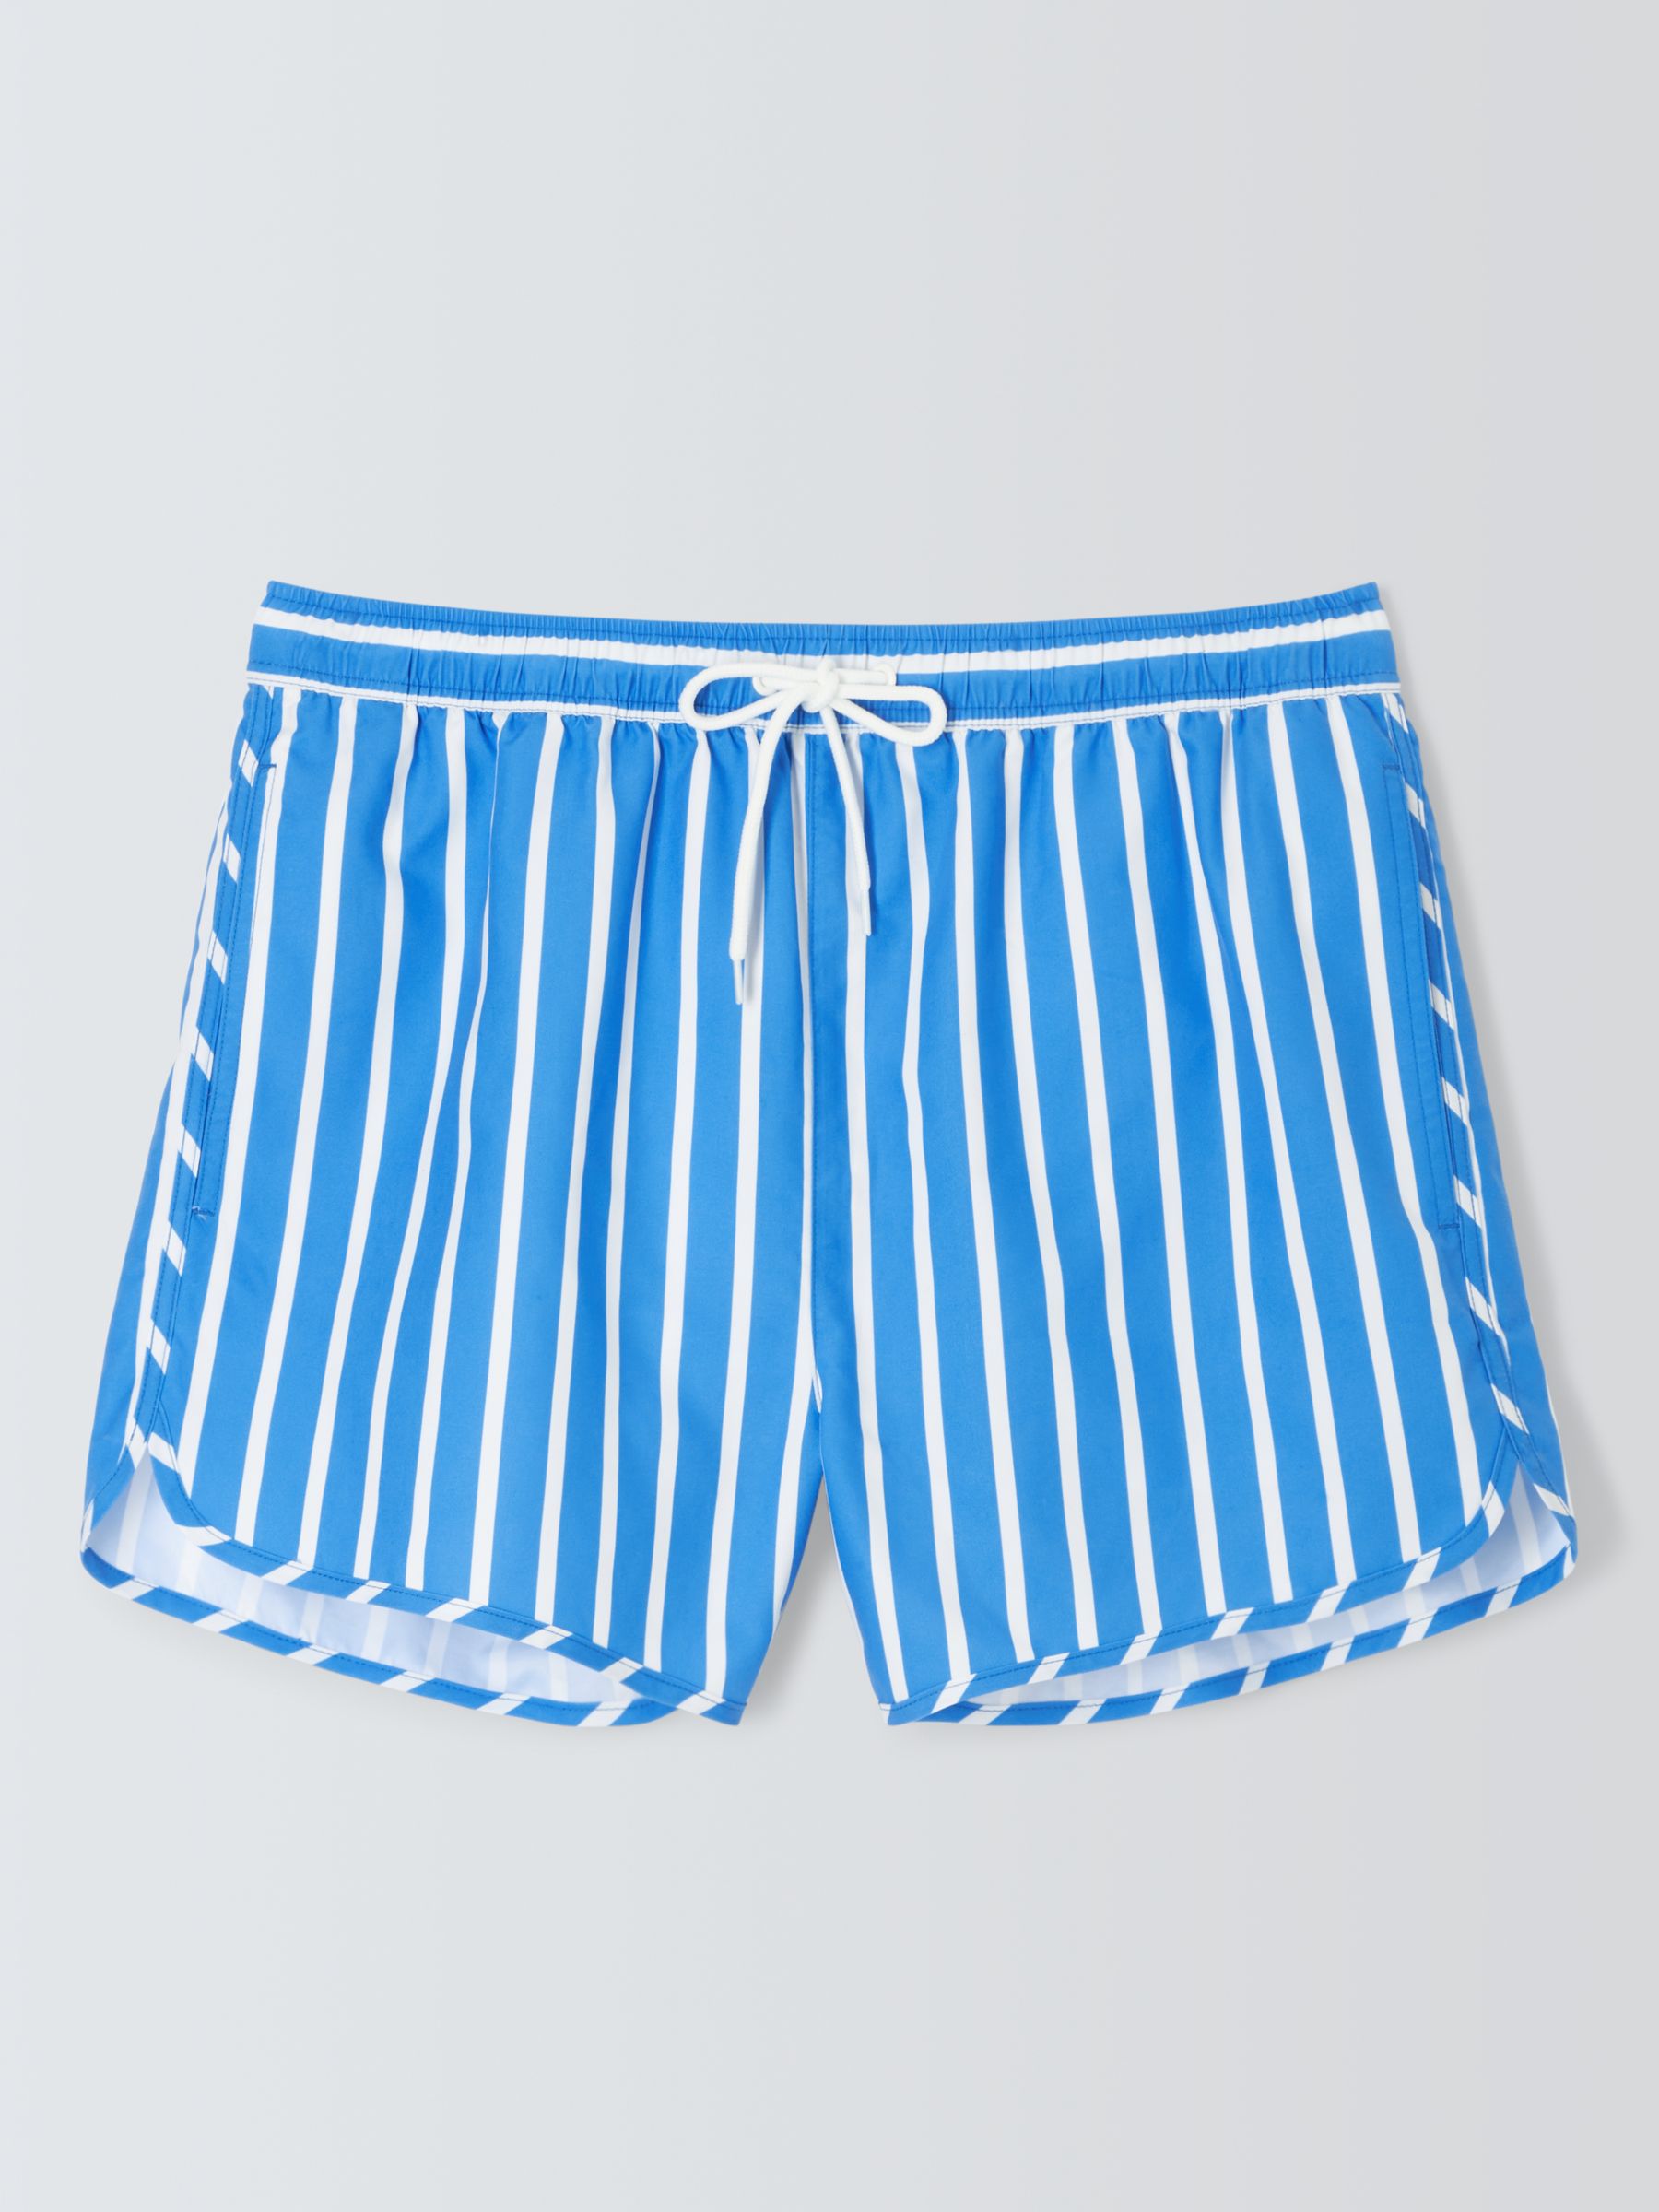 John Lewis ANYDAY Recycled Stripe Swim Shorts, Blue/White, M